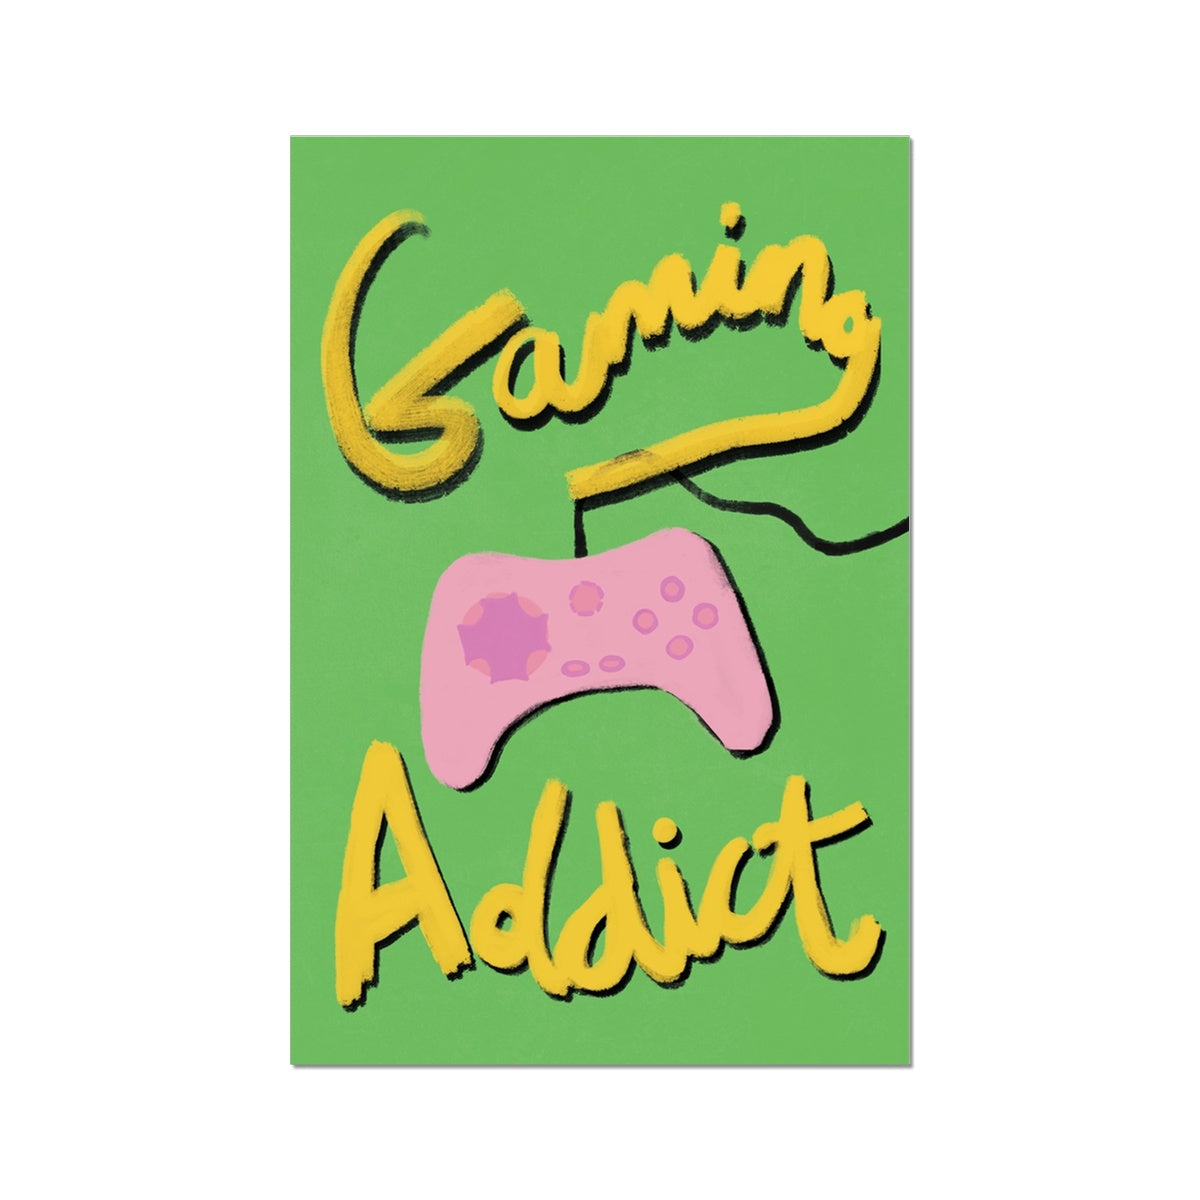 Gaming Addict Print - Green, Yellow, Pink Fine Art Print